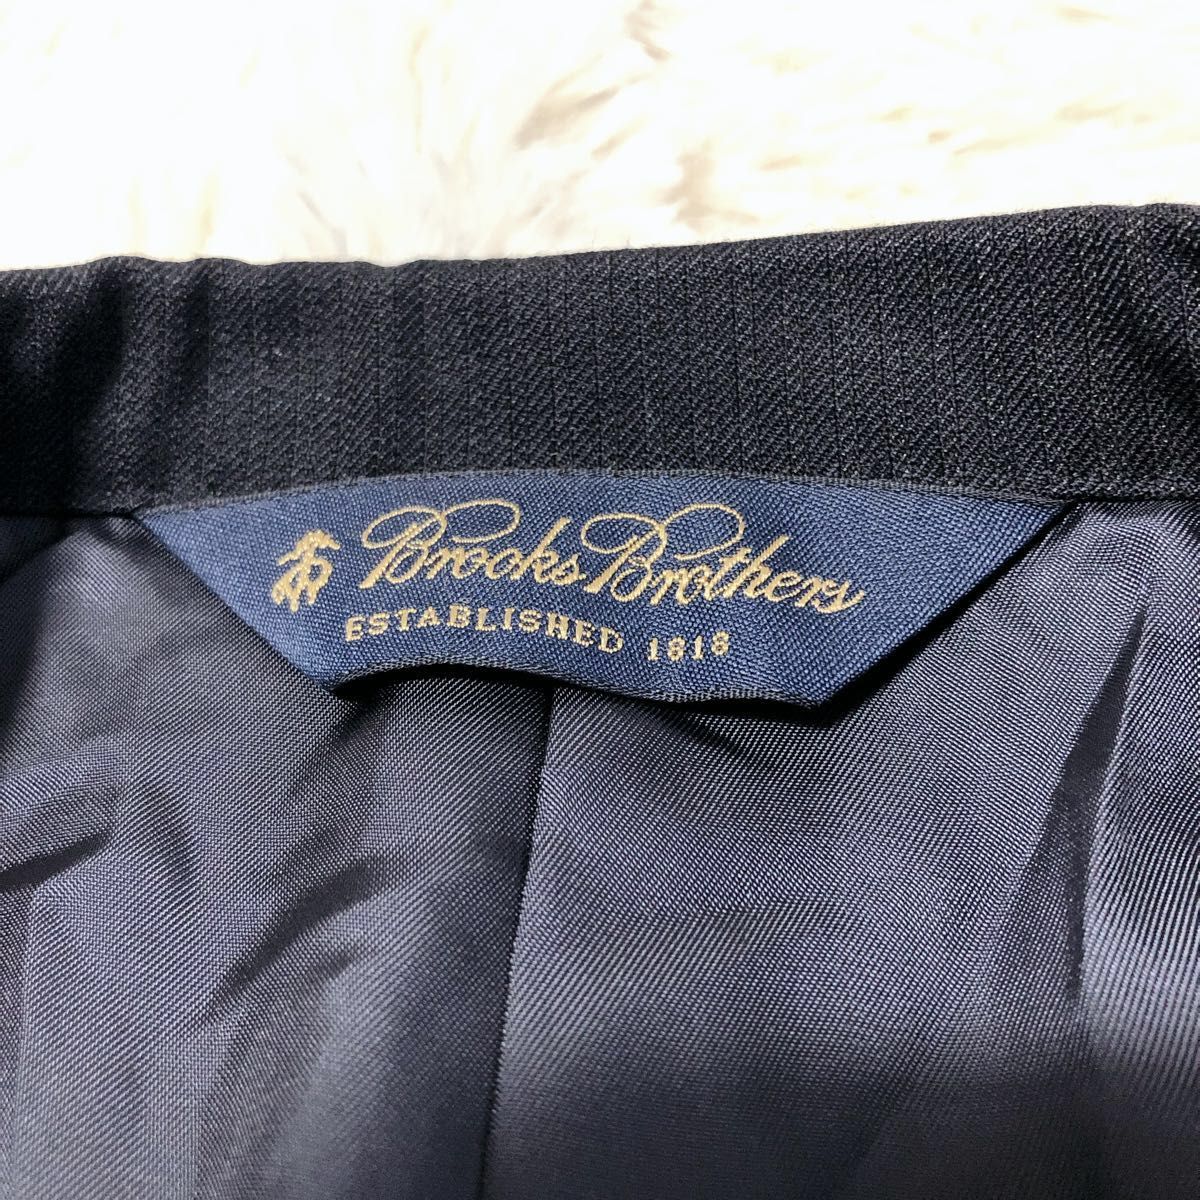 BROOKS BROTHERS ブルックスブラザーズテーラードジャケット 黒 ブラック 2Bストライプ ビジネス ウール